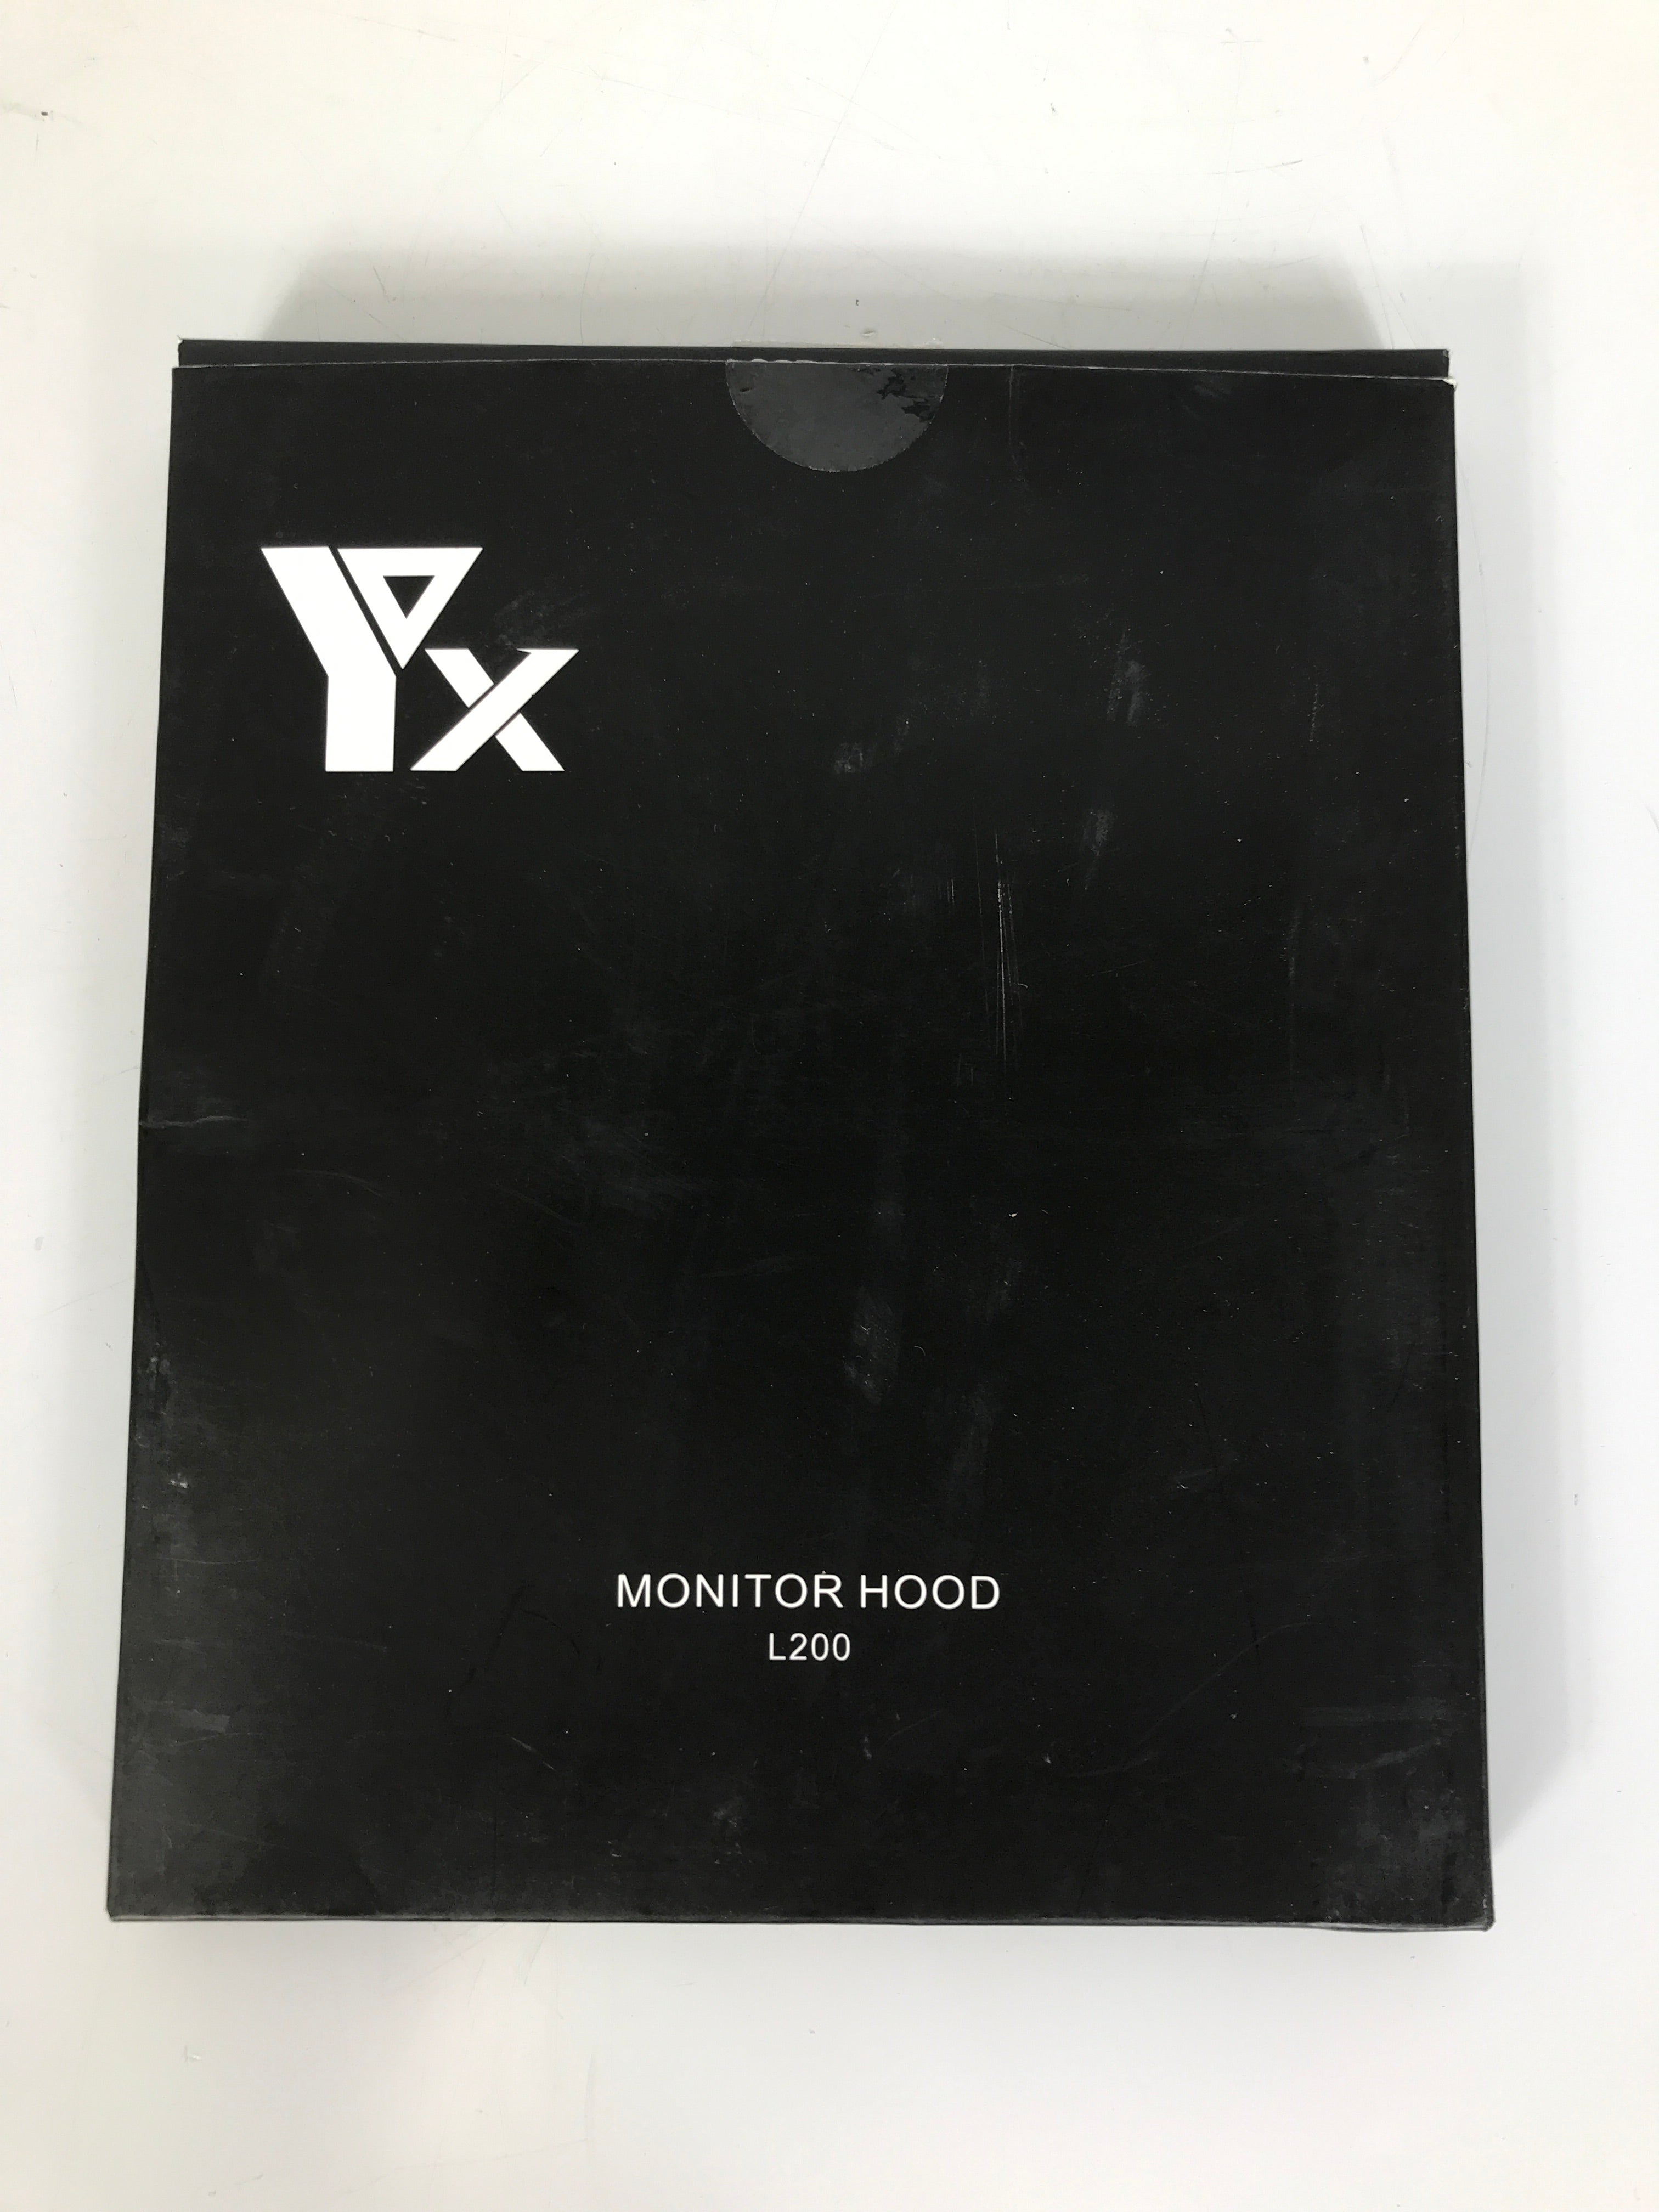 YX Monitor Hood L200